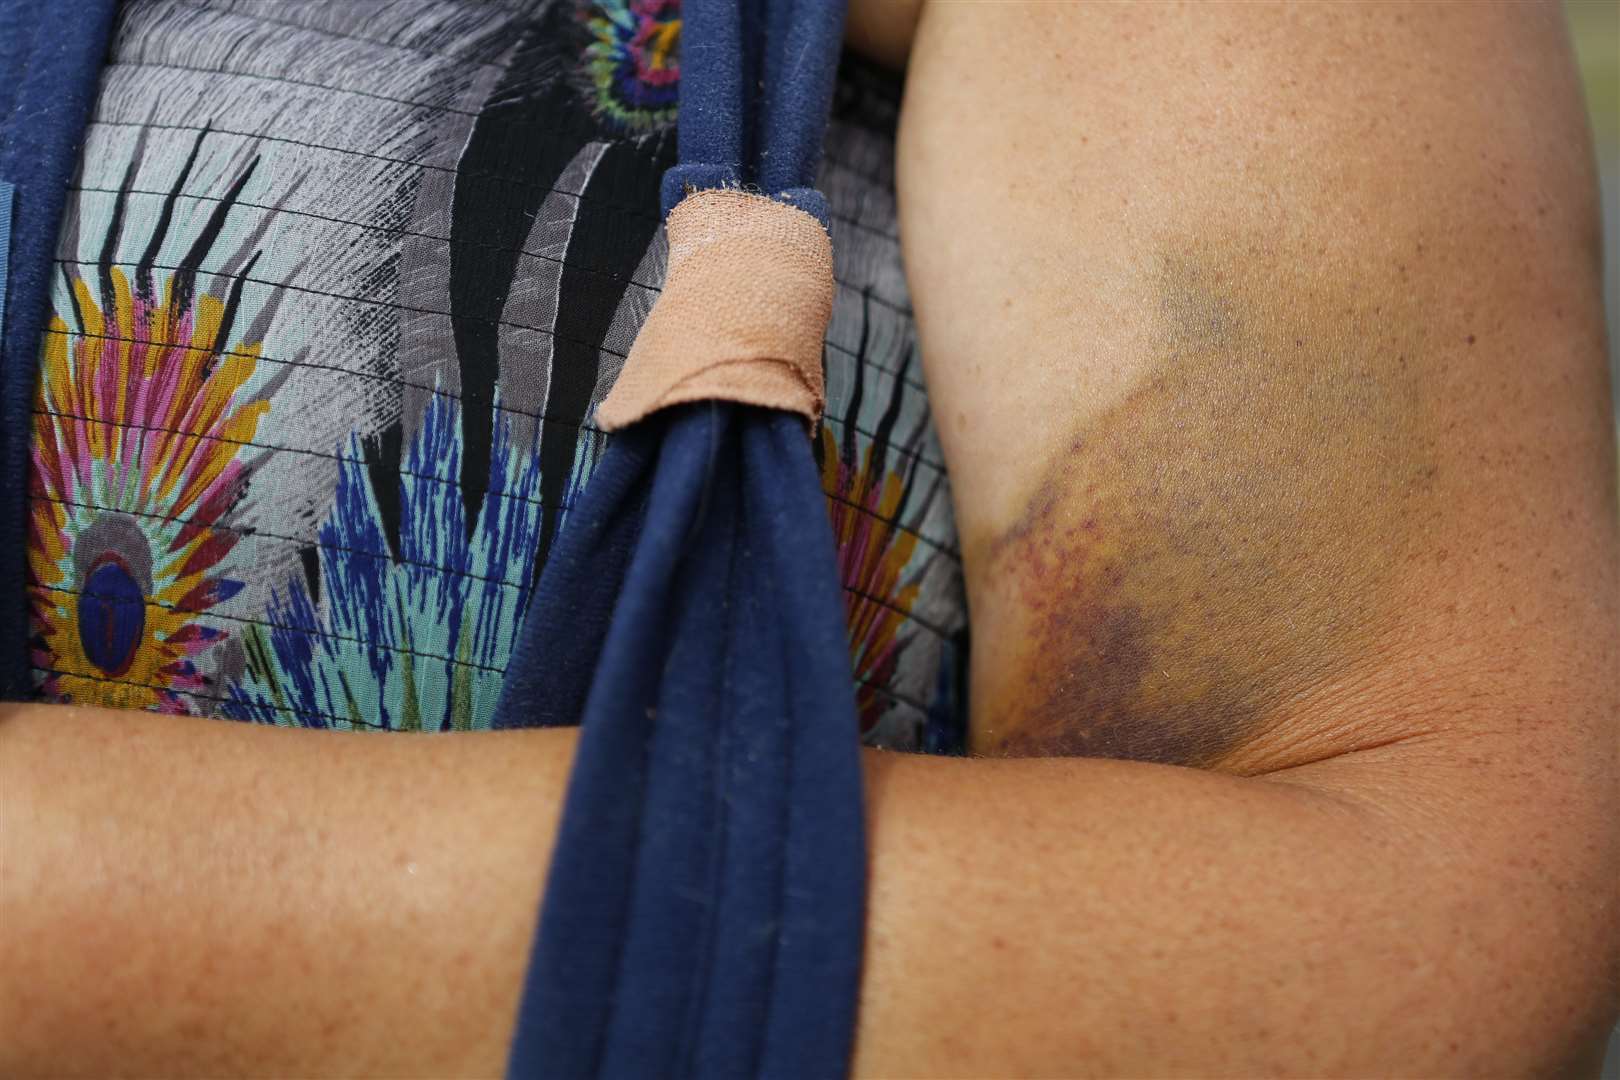 Lizette's bruised arm